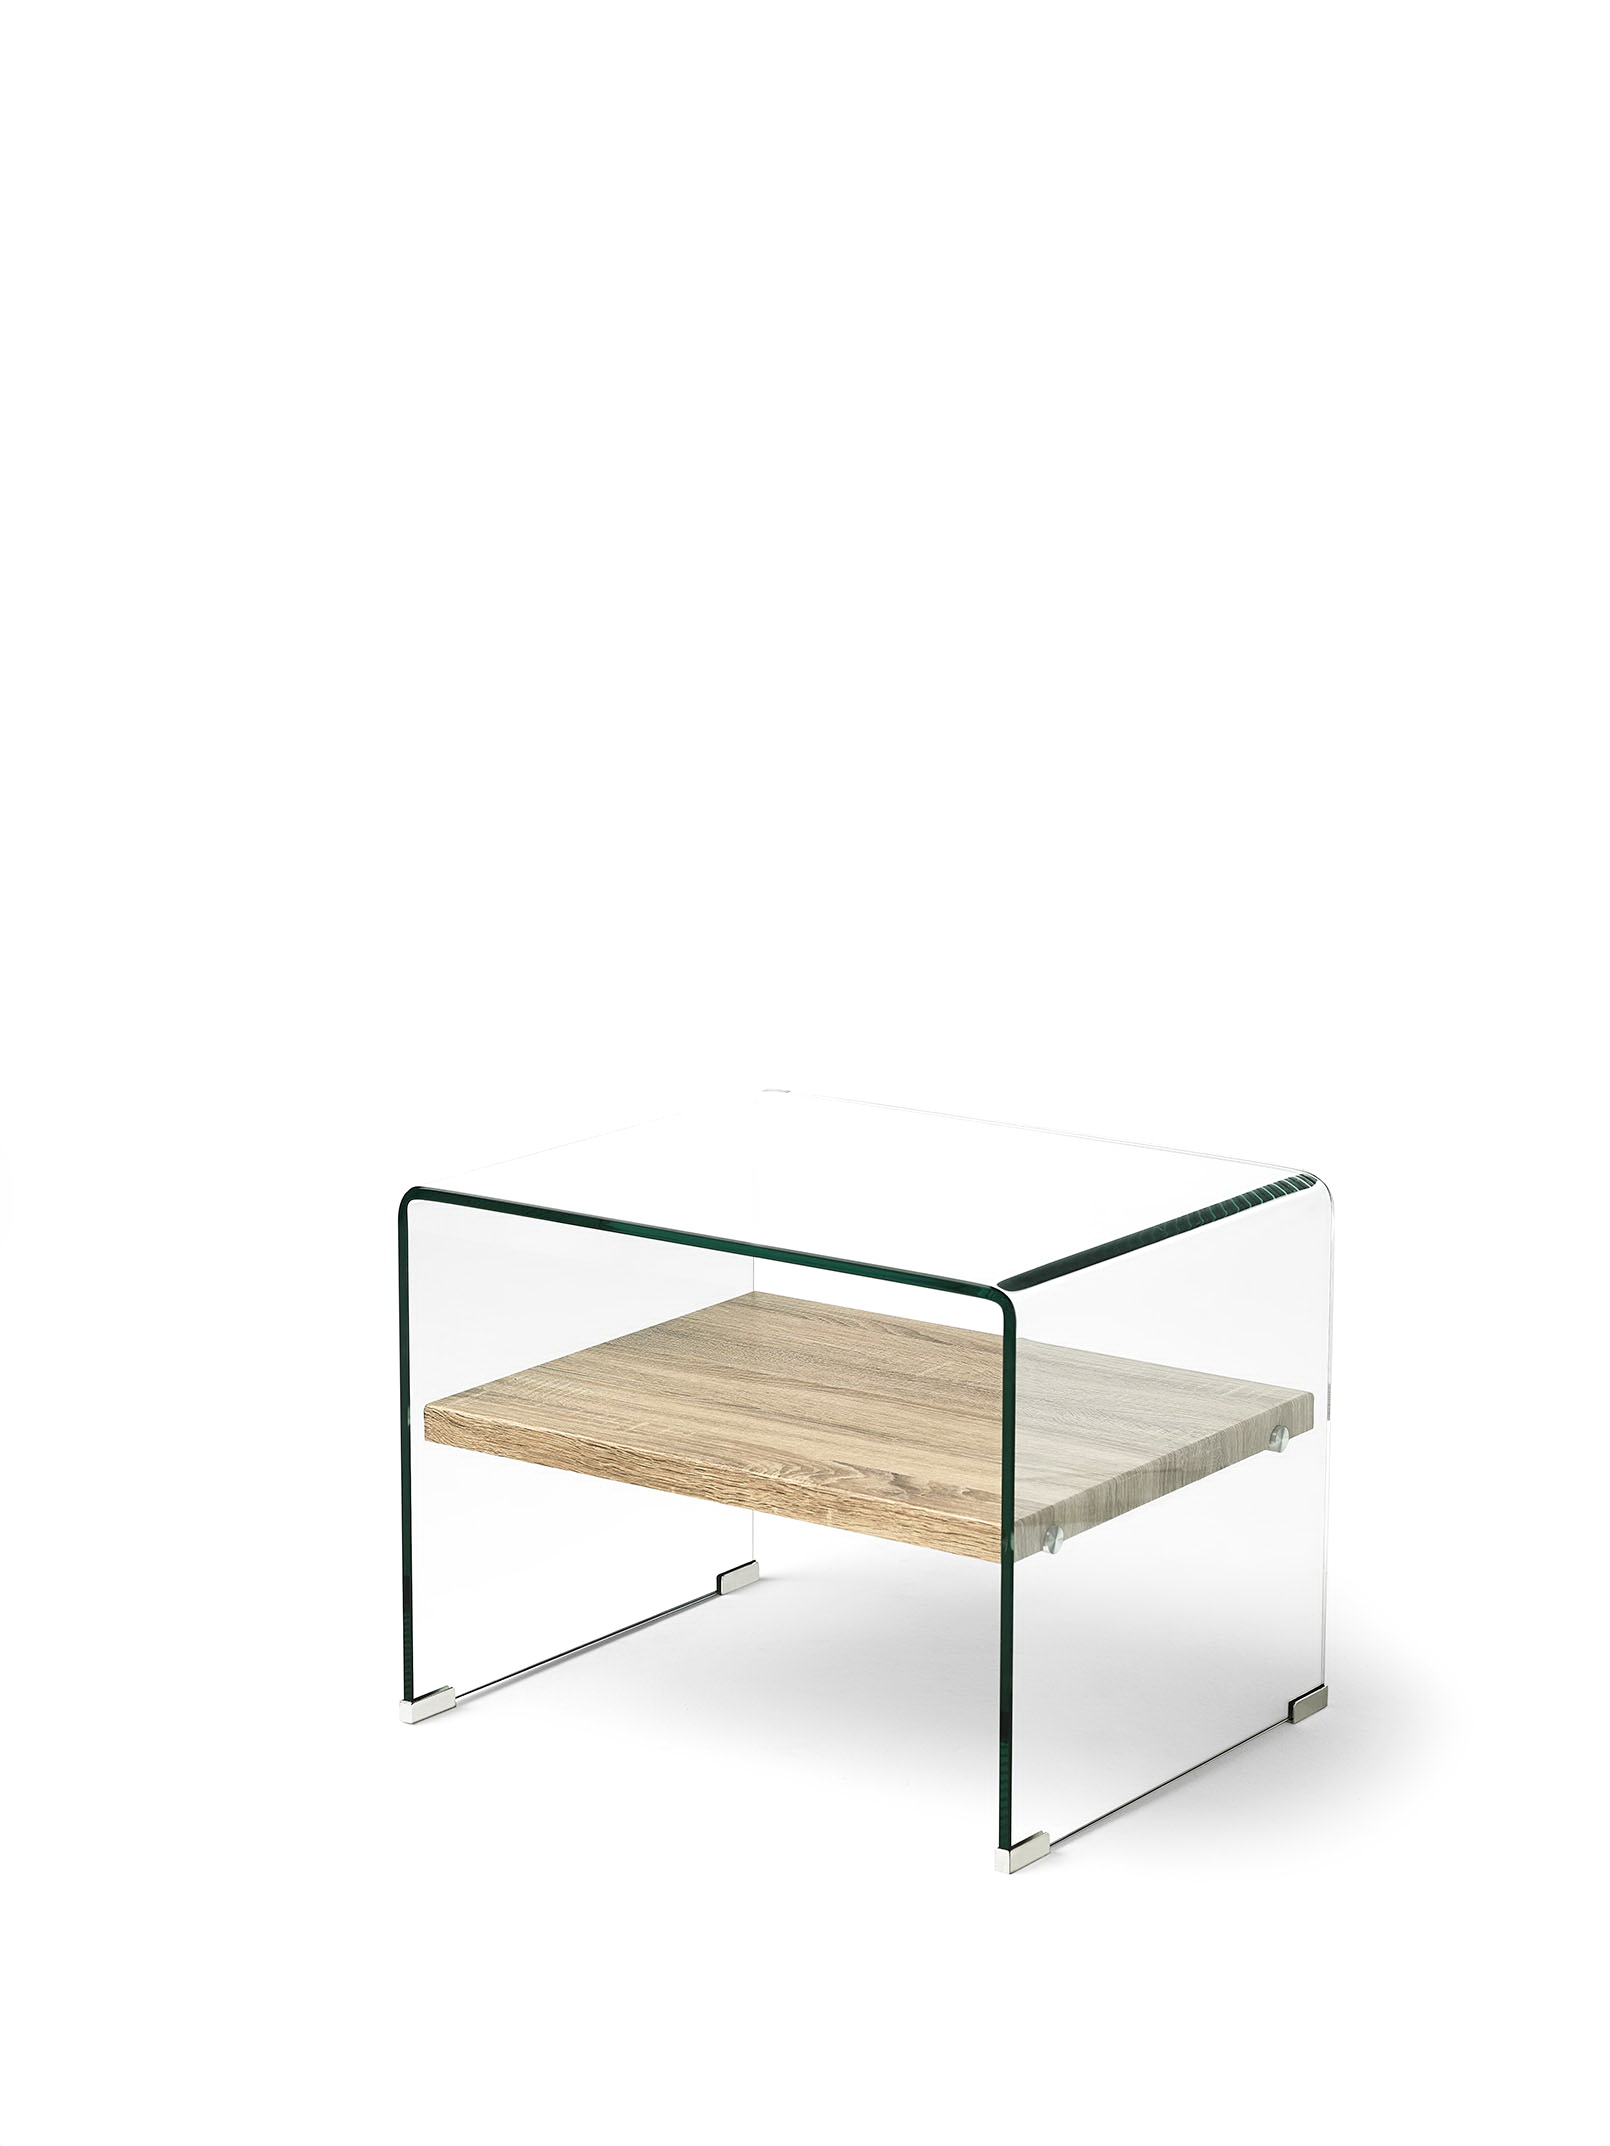 Mesa centro Estilo Nórdico cristal y madera M-130 by Dugar Home GRUPO DUPEN en muebles antoñán® León